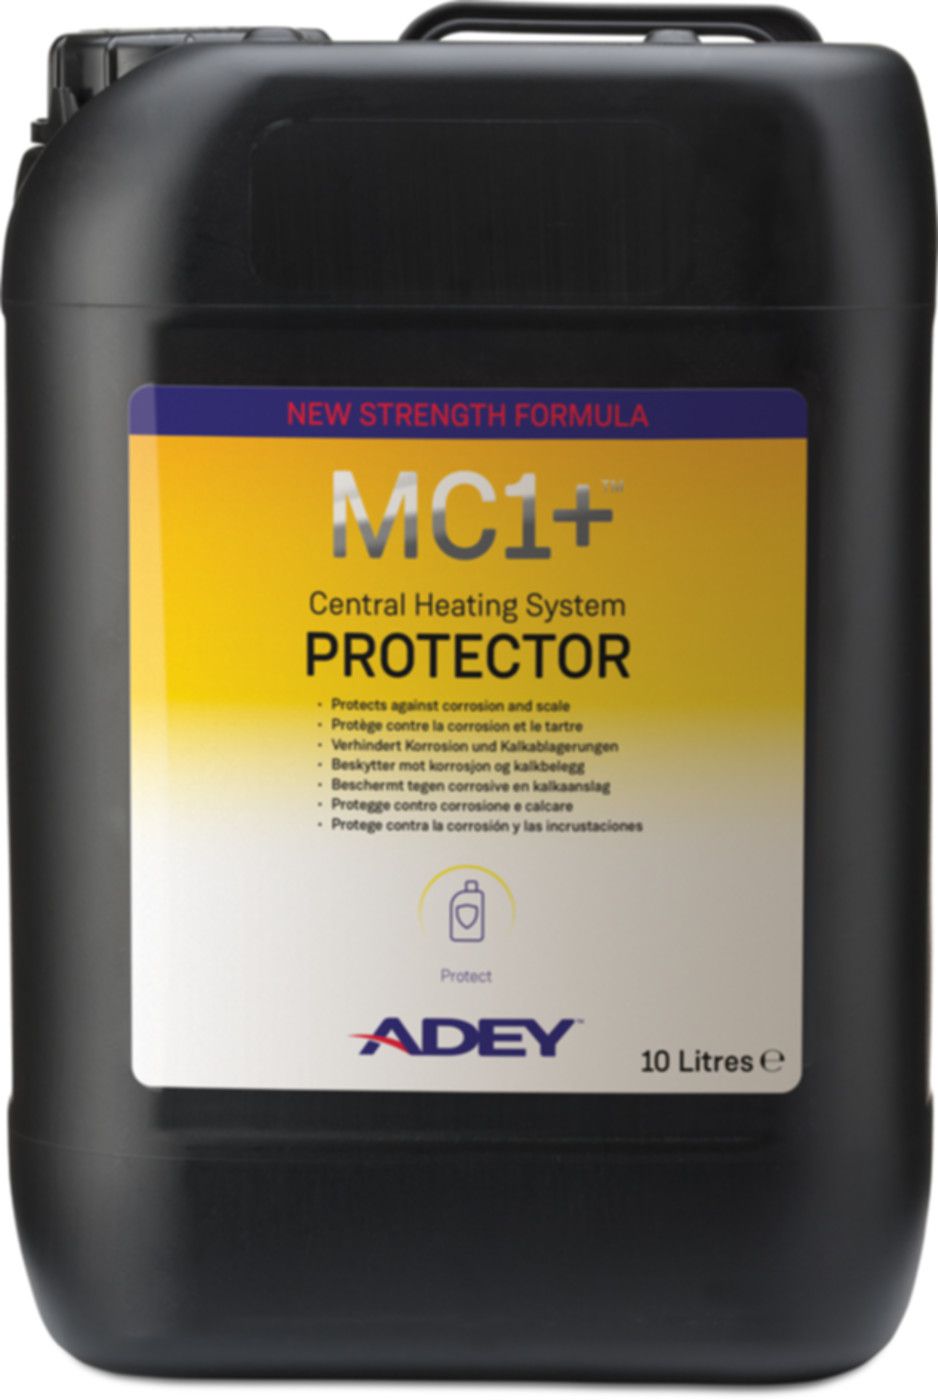 Heizungsschutzmittel ADEY Protector MC1+ 0.5 l Flasche - Heizungswasseraufbereitung